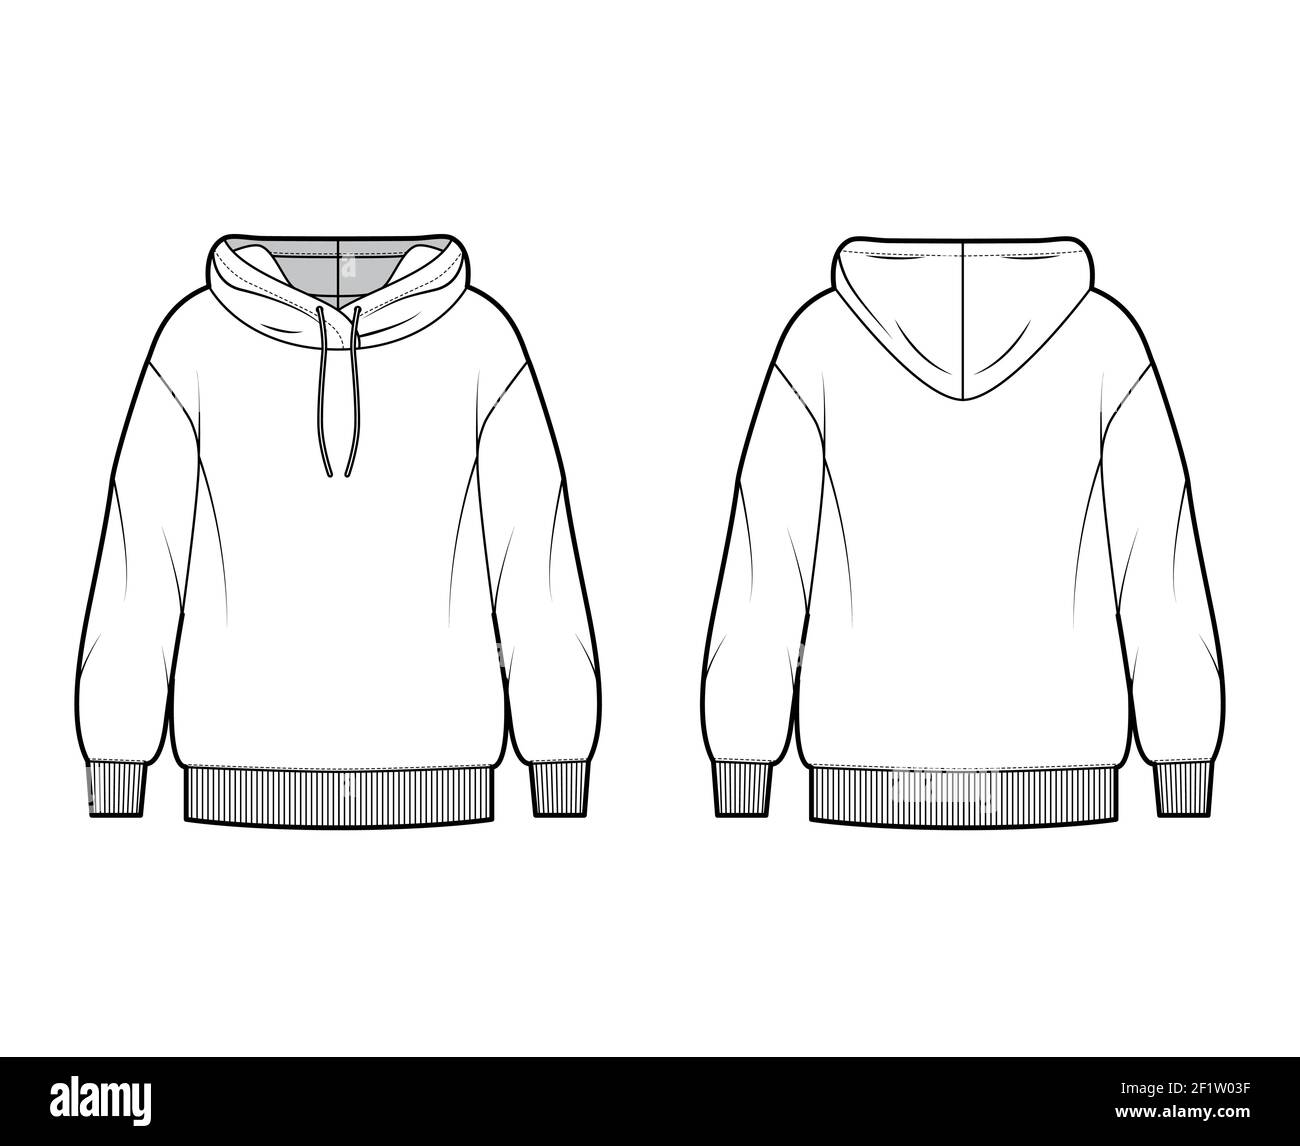 Hoody sweatshirt technical fashion illustration with long sleeves